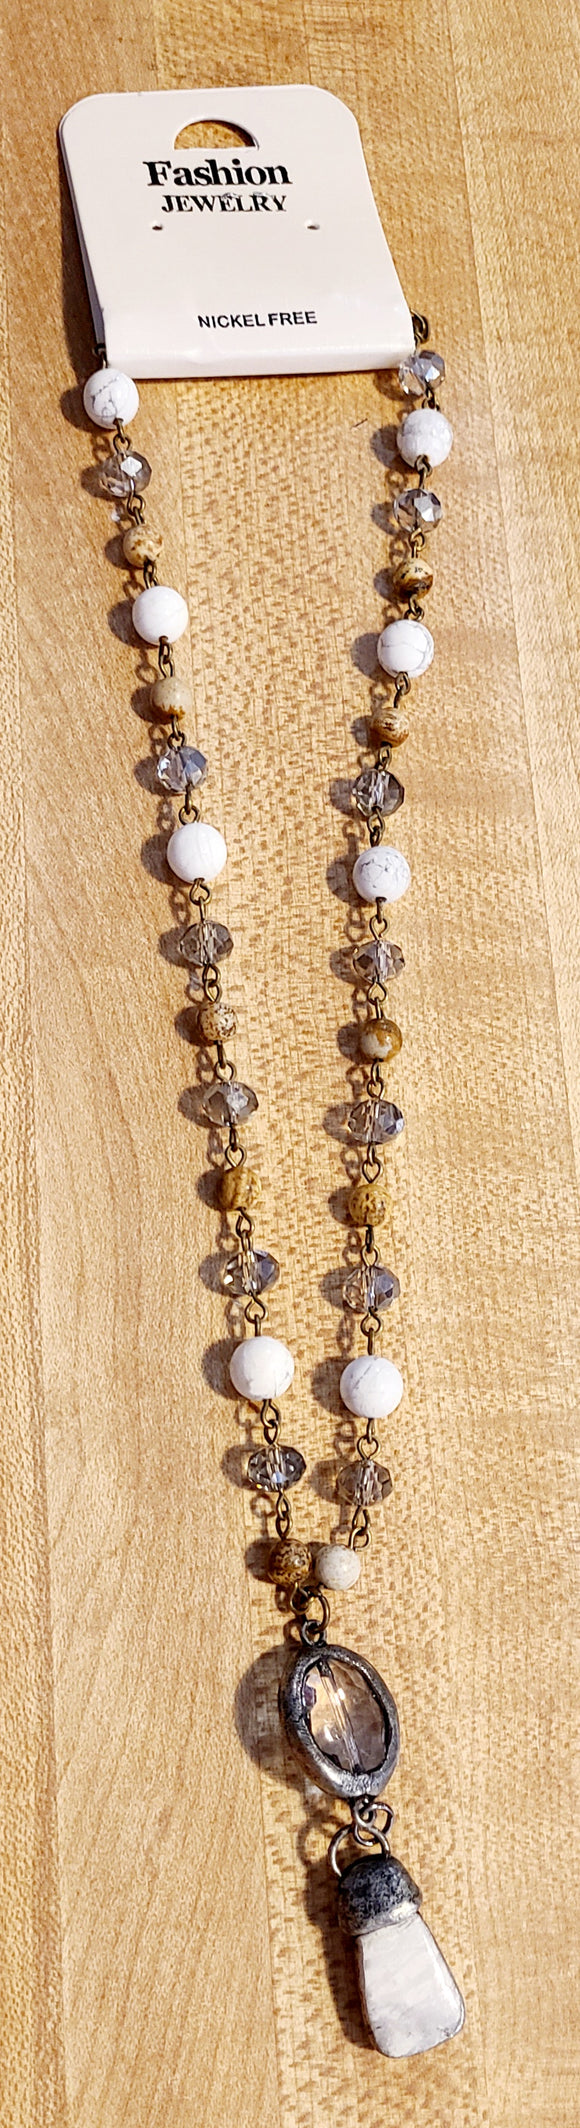 small white stone necklace